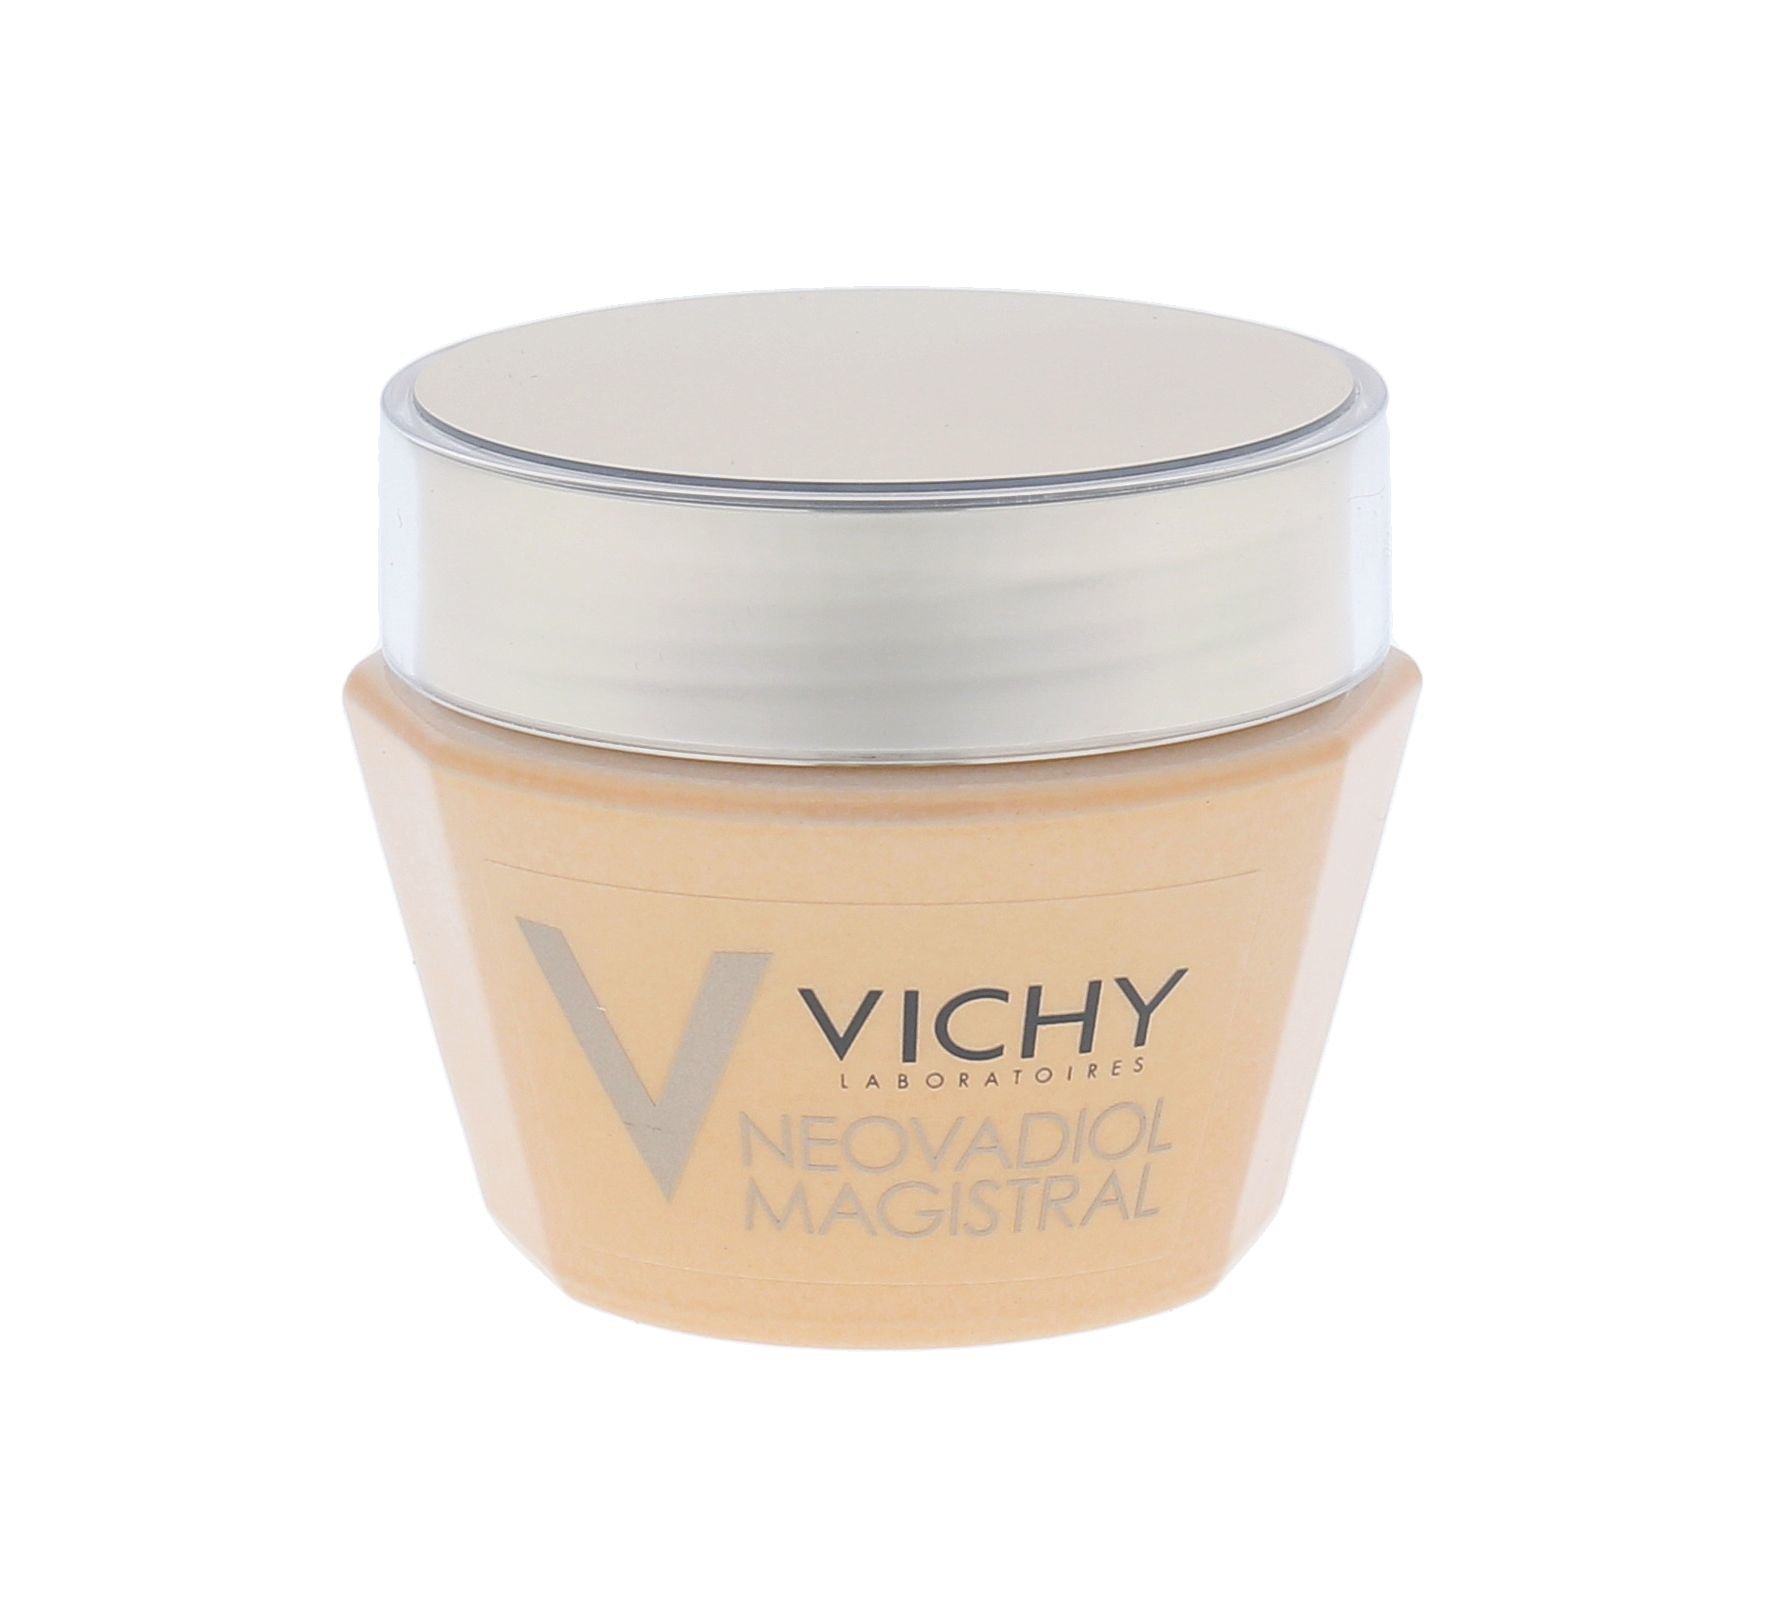 Vichy Neovadiol Magistral Day Cream